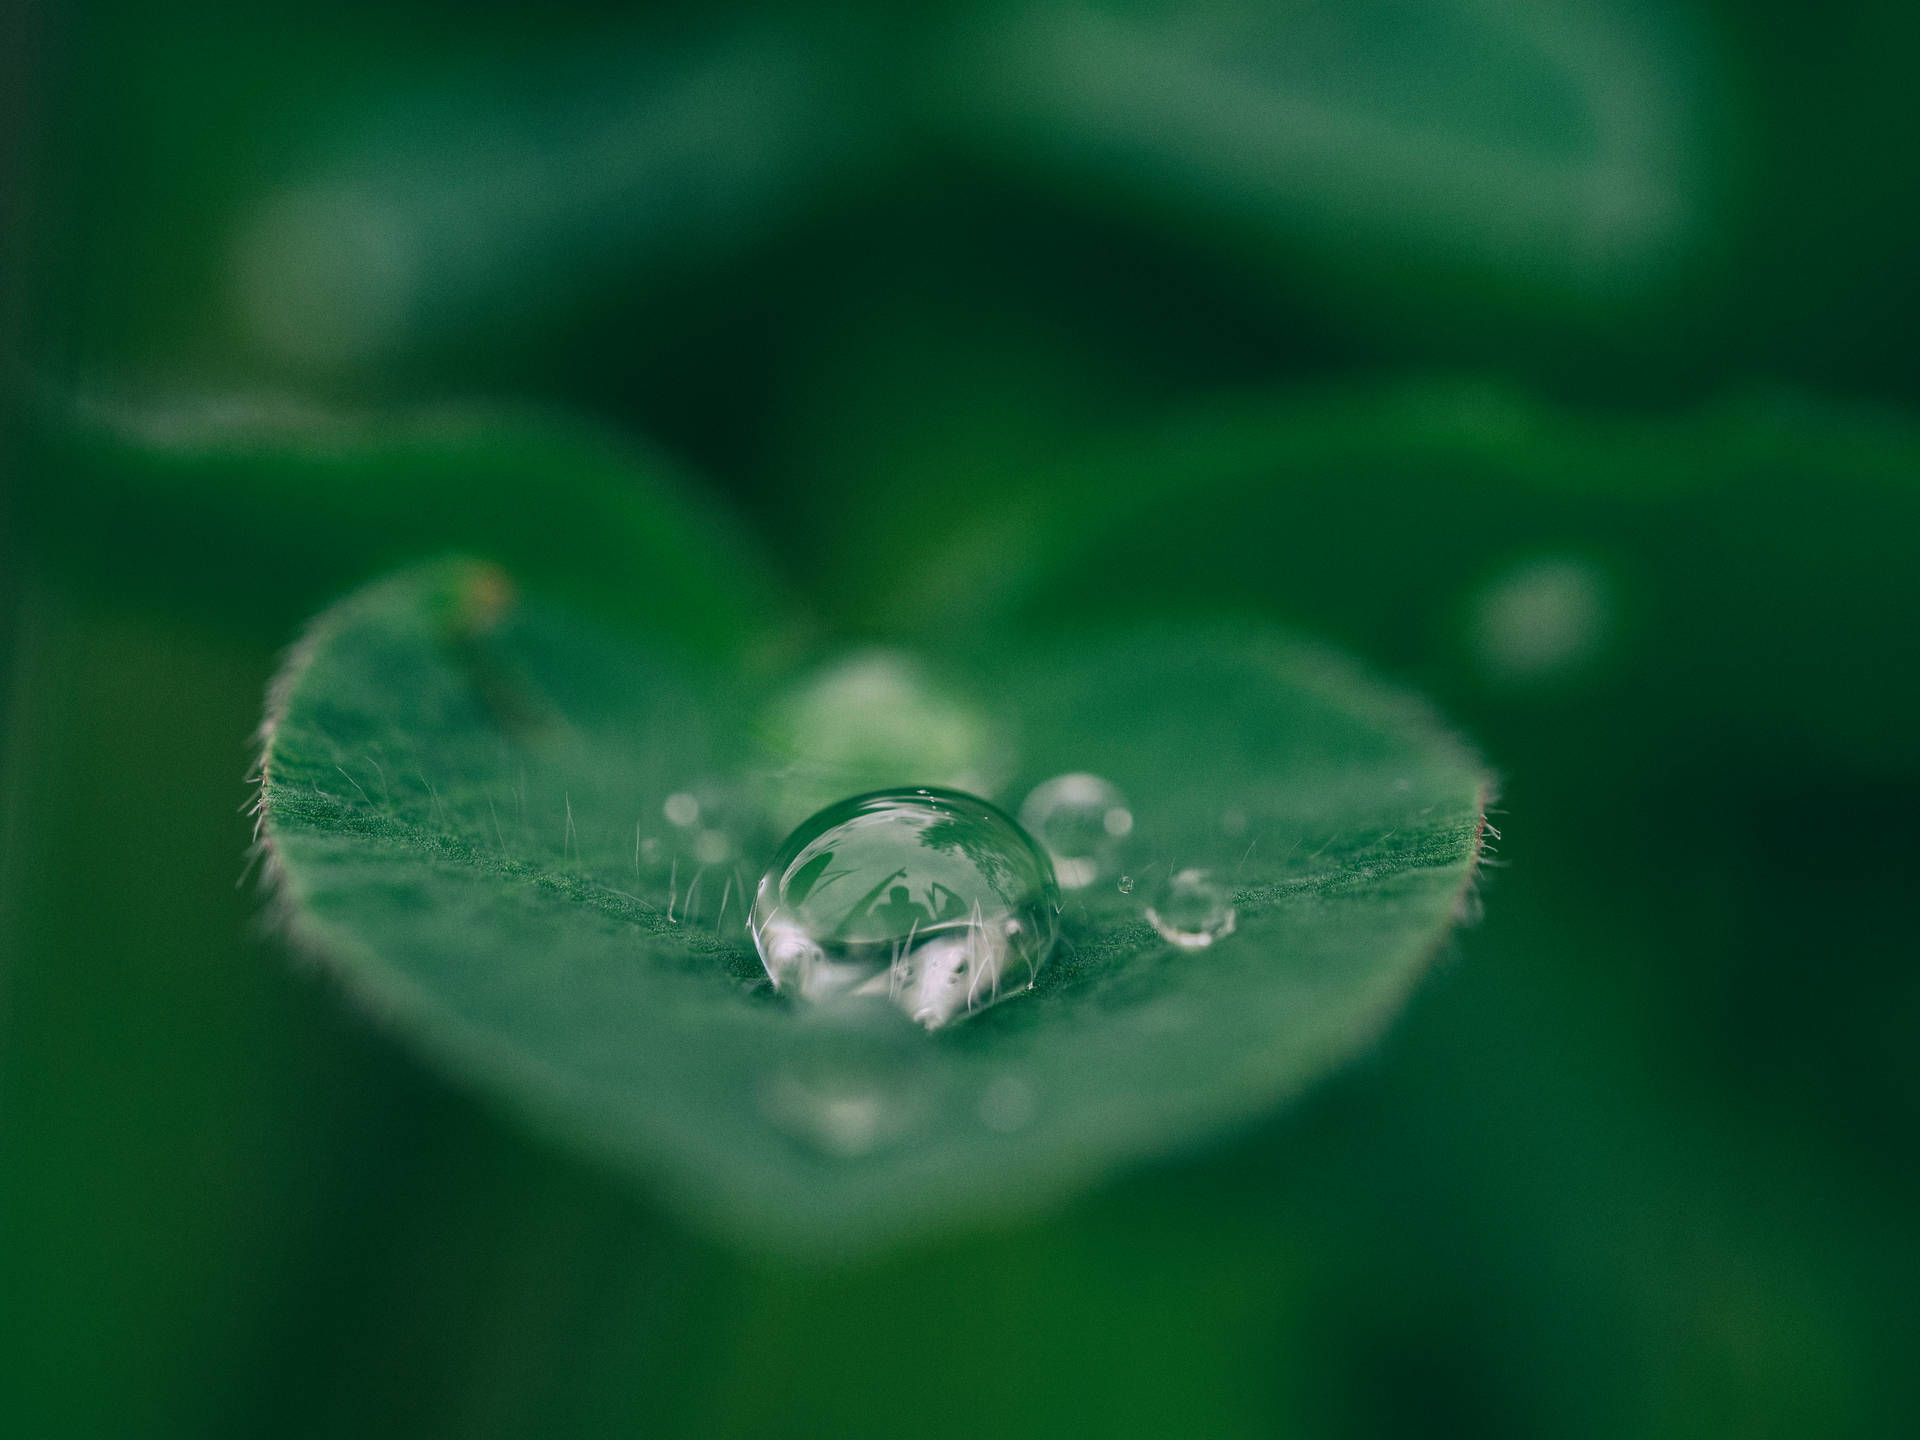 Droplets of dew glisten on a green leaf Wallpaper